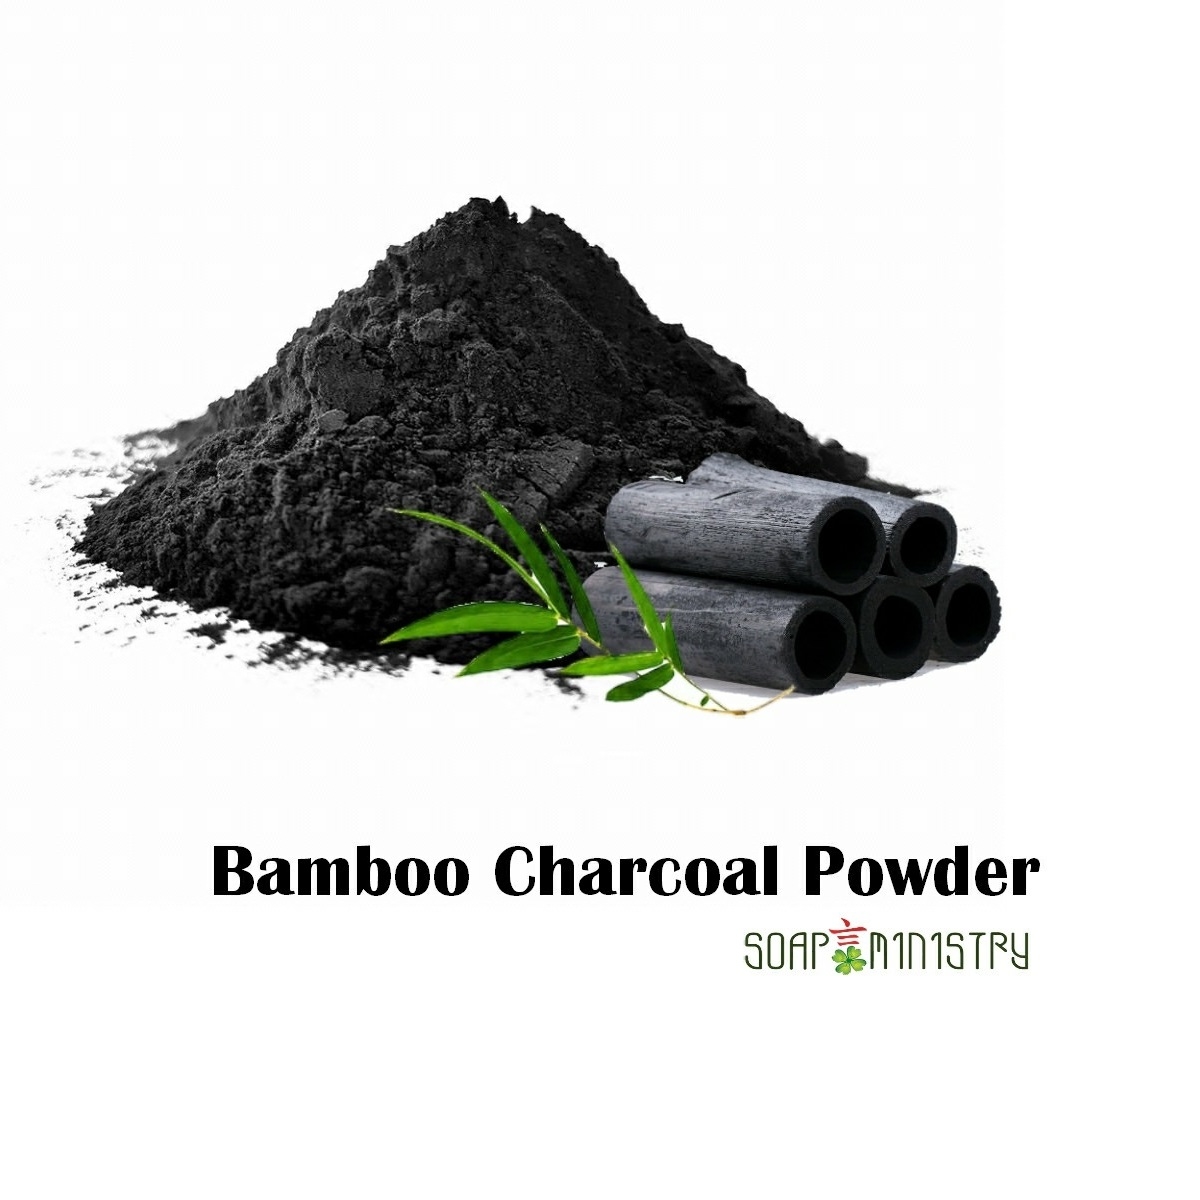 Bamboo Charcoal Powder 250g